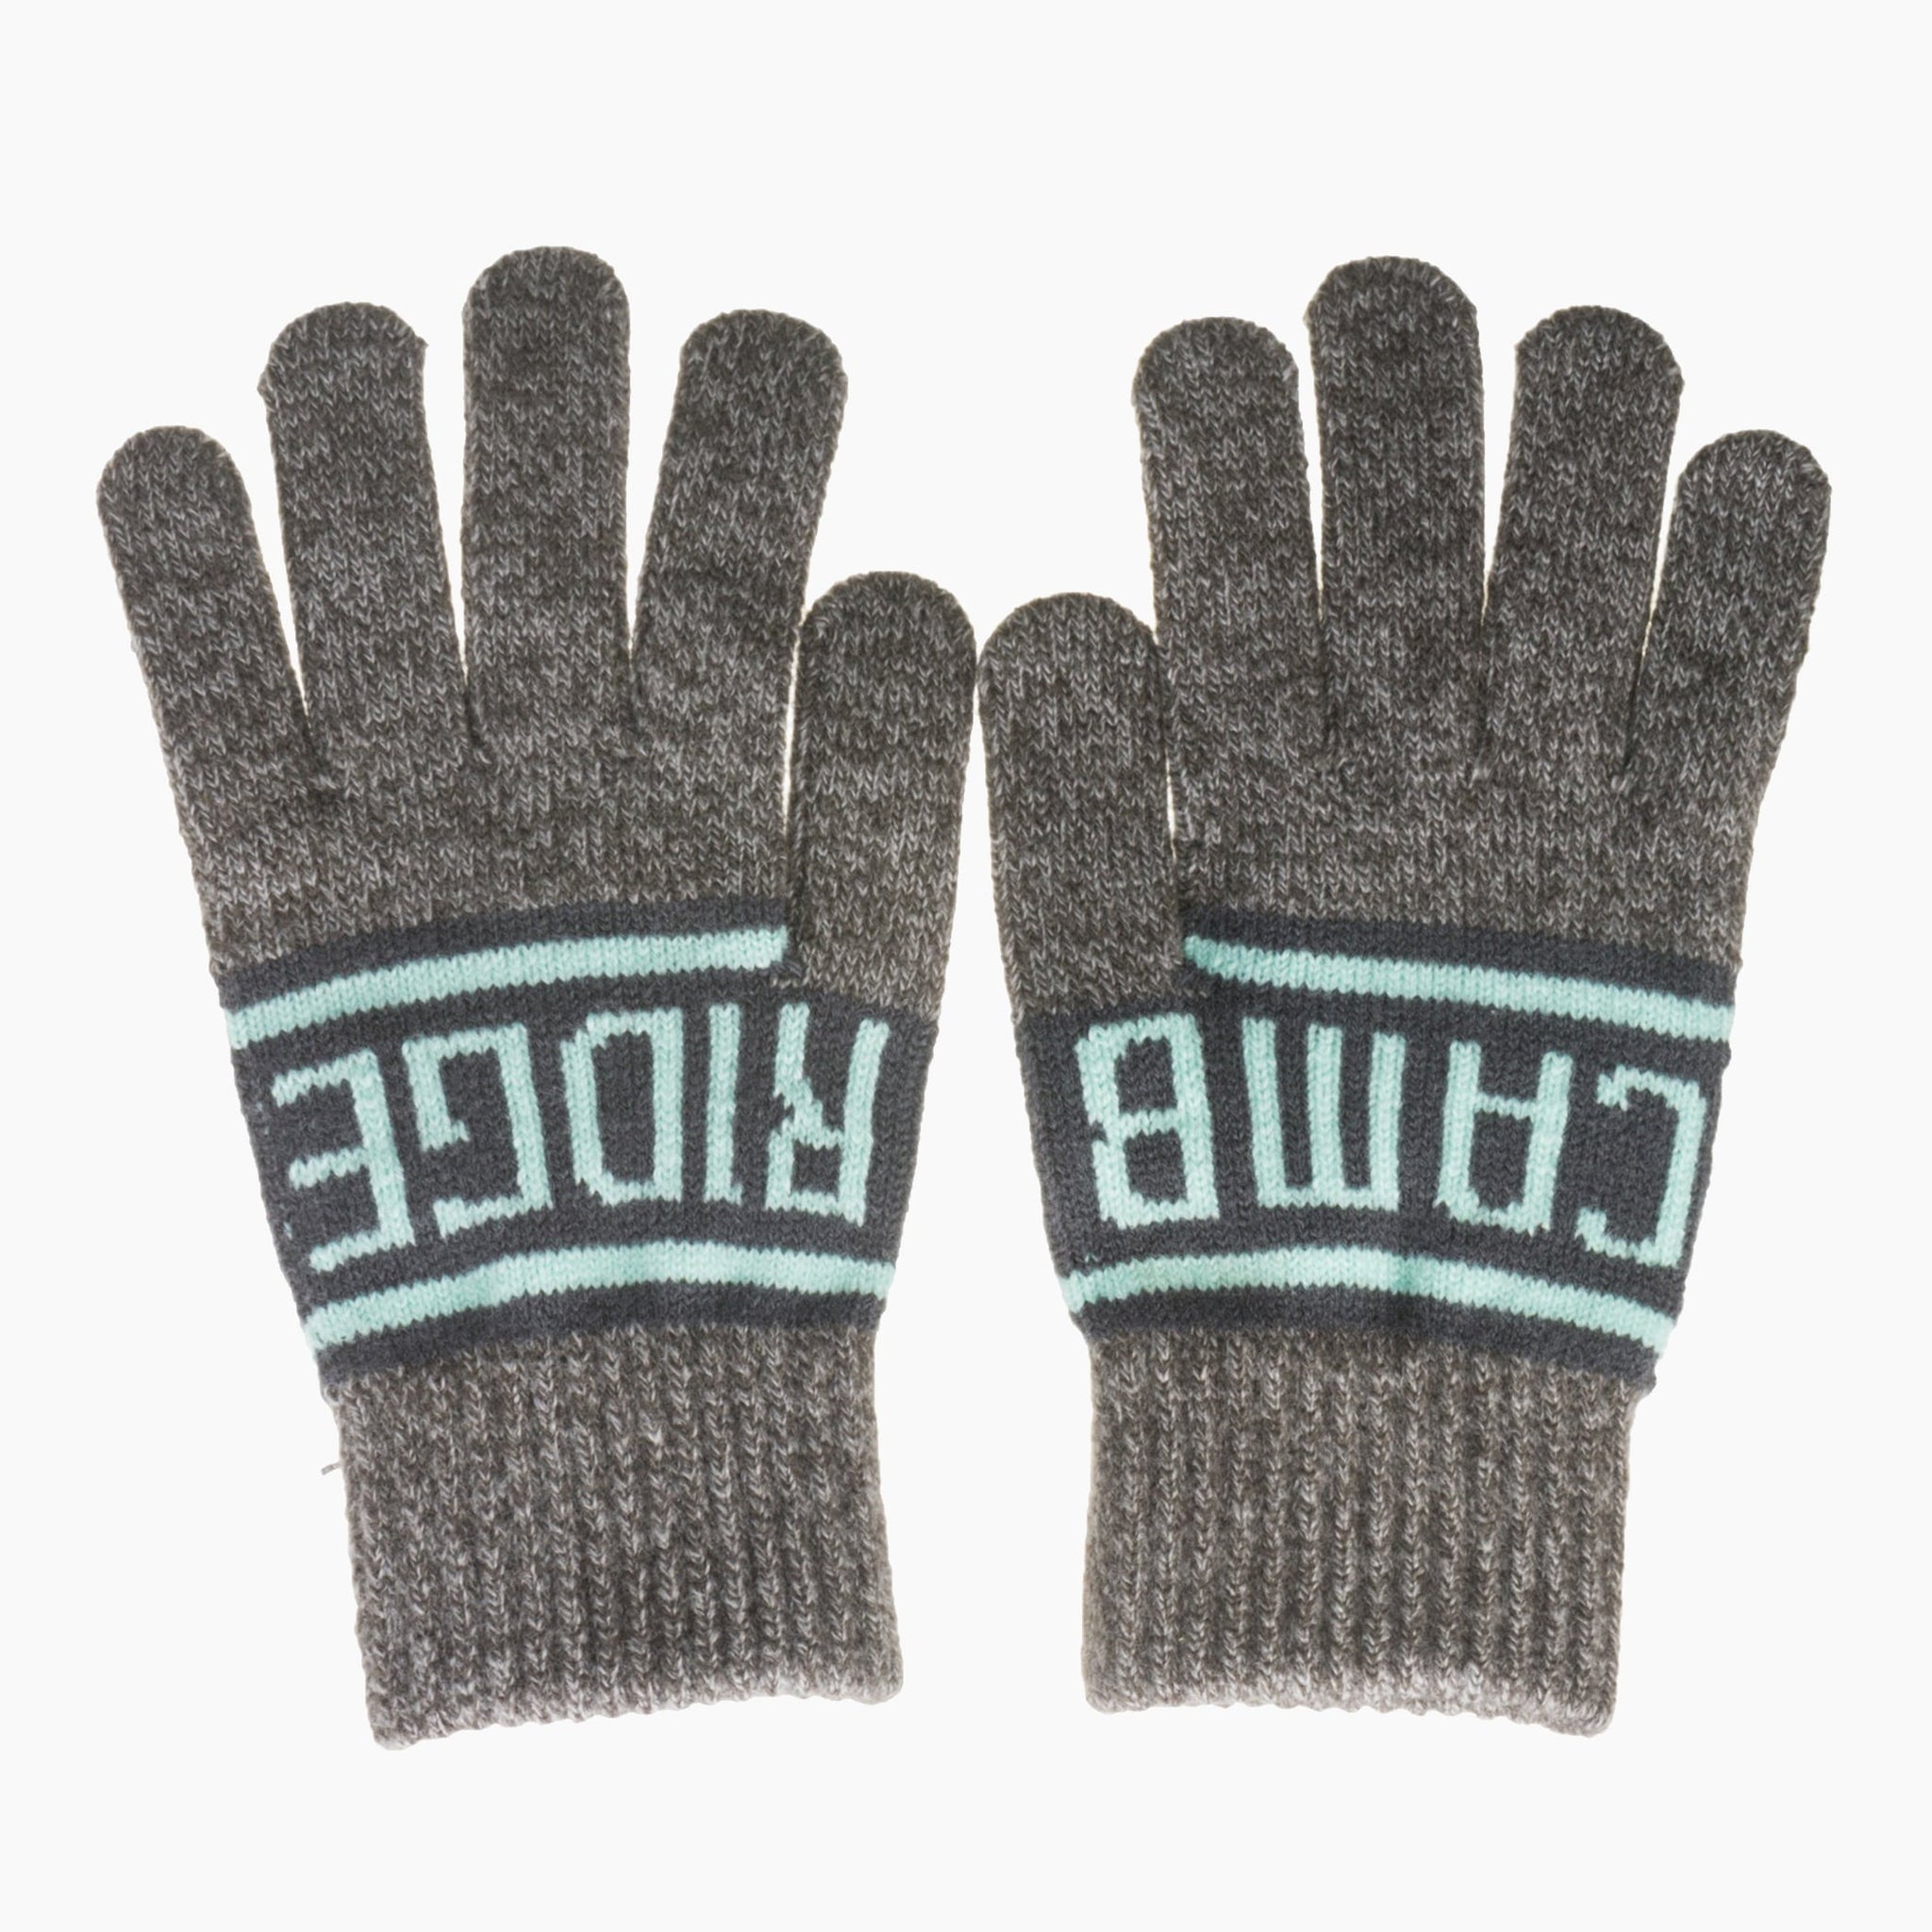 Cambridge Gloves - Robin Ruth